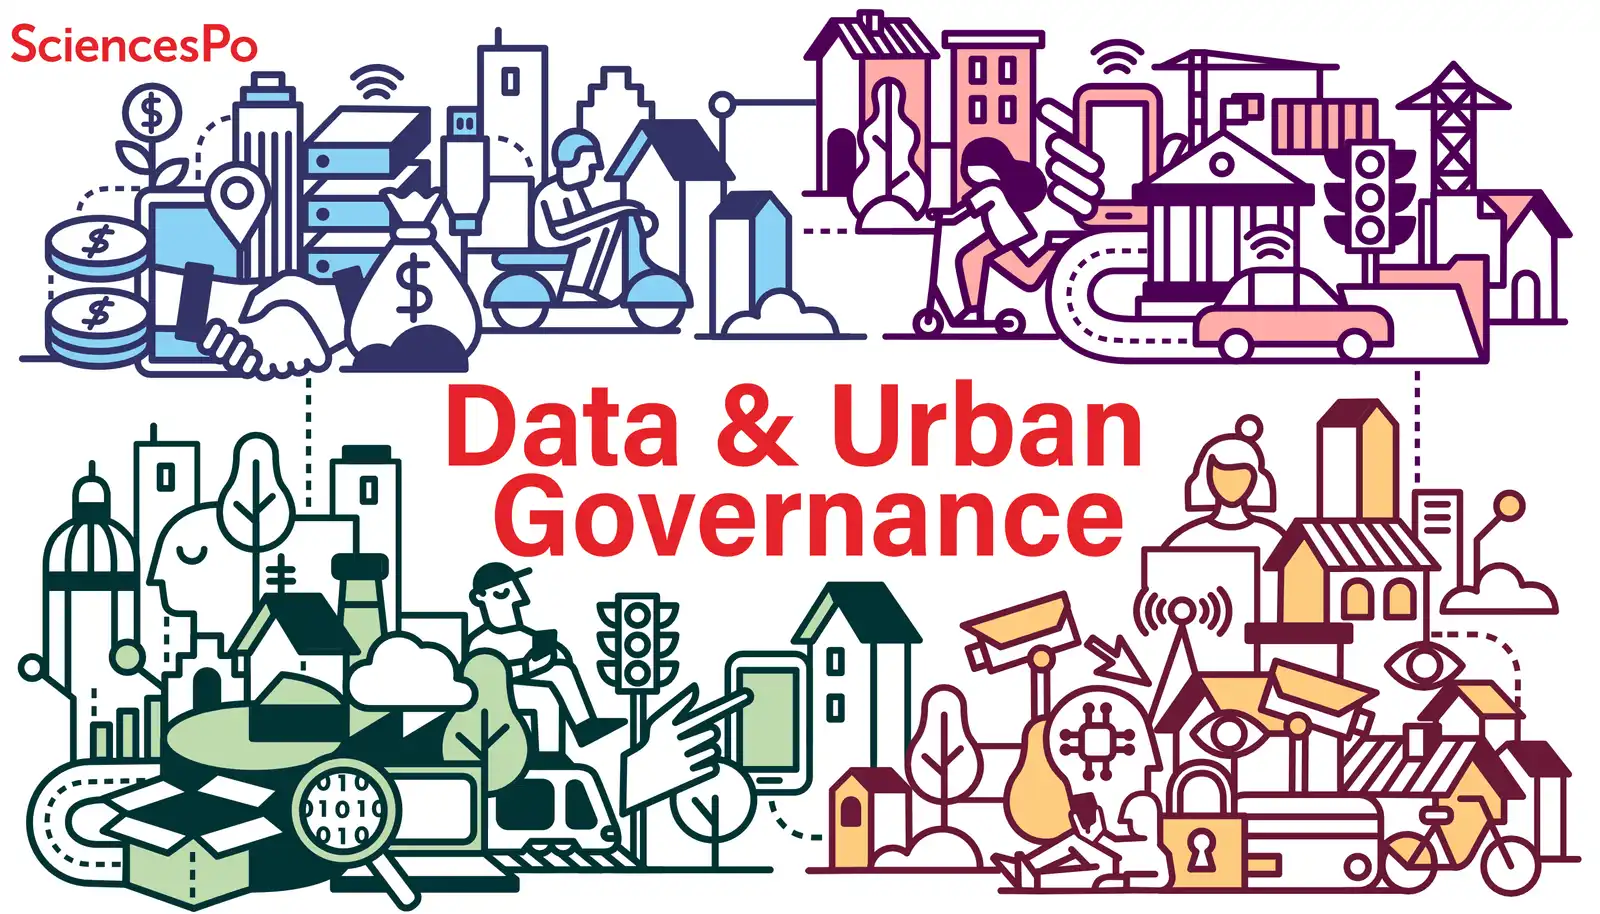 Data & Urban Governance